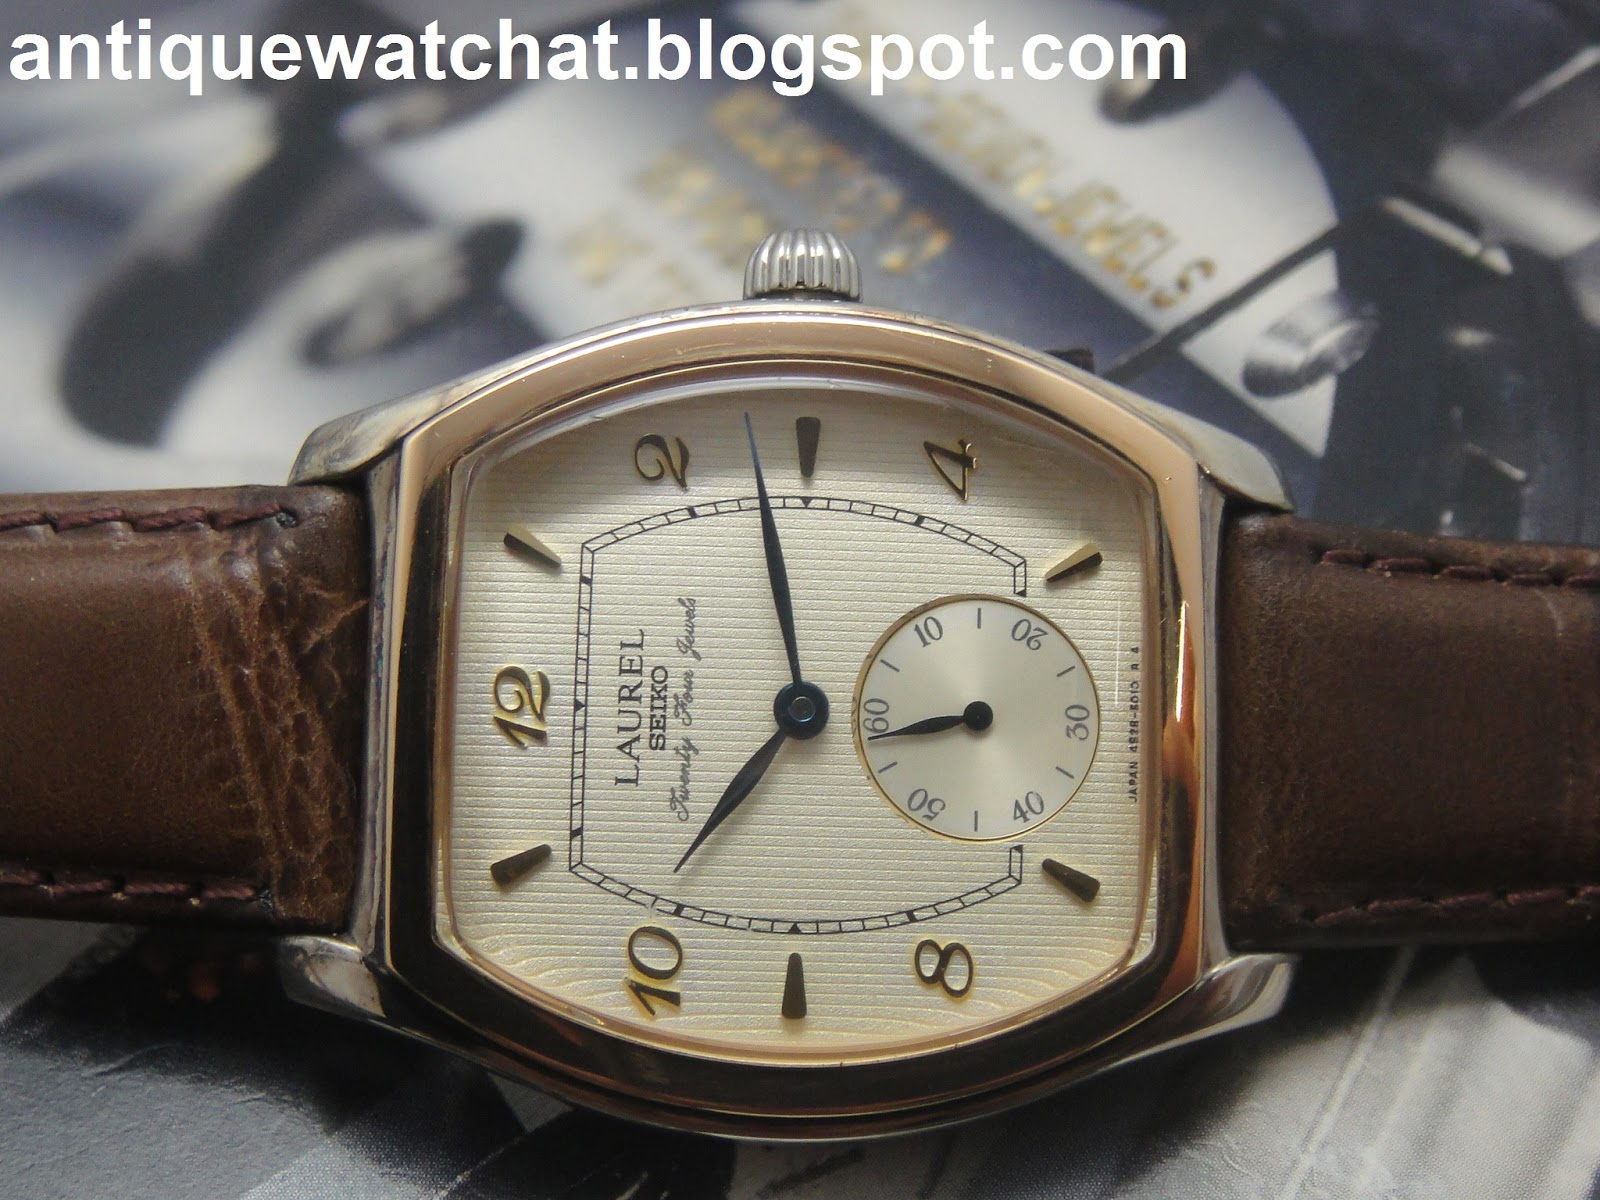 Antique Watch Bar: SEIKO LAUREL MANUAL WINDING 4S28-5010 24 JEWELS LJAK600  JDM100 (SOLD)